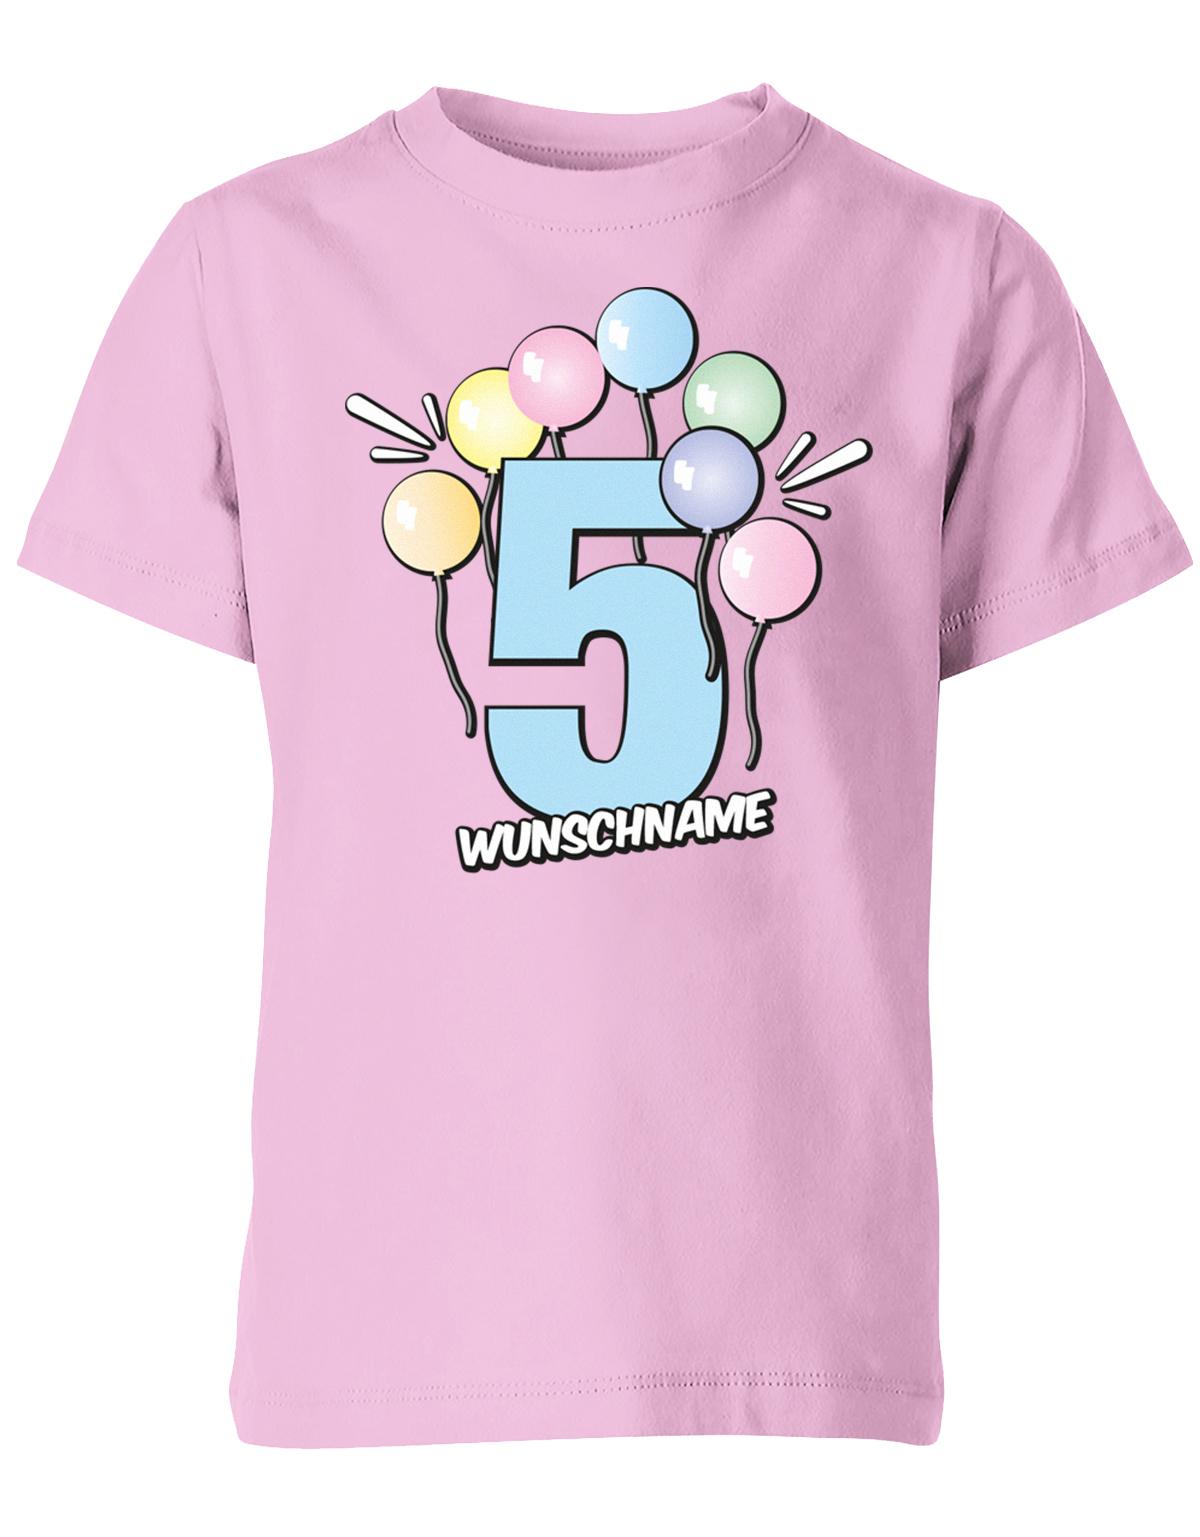 Luftballons-pastell-5-geburtstag-wunschname-kinder-shirt-rosa